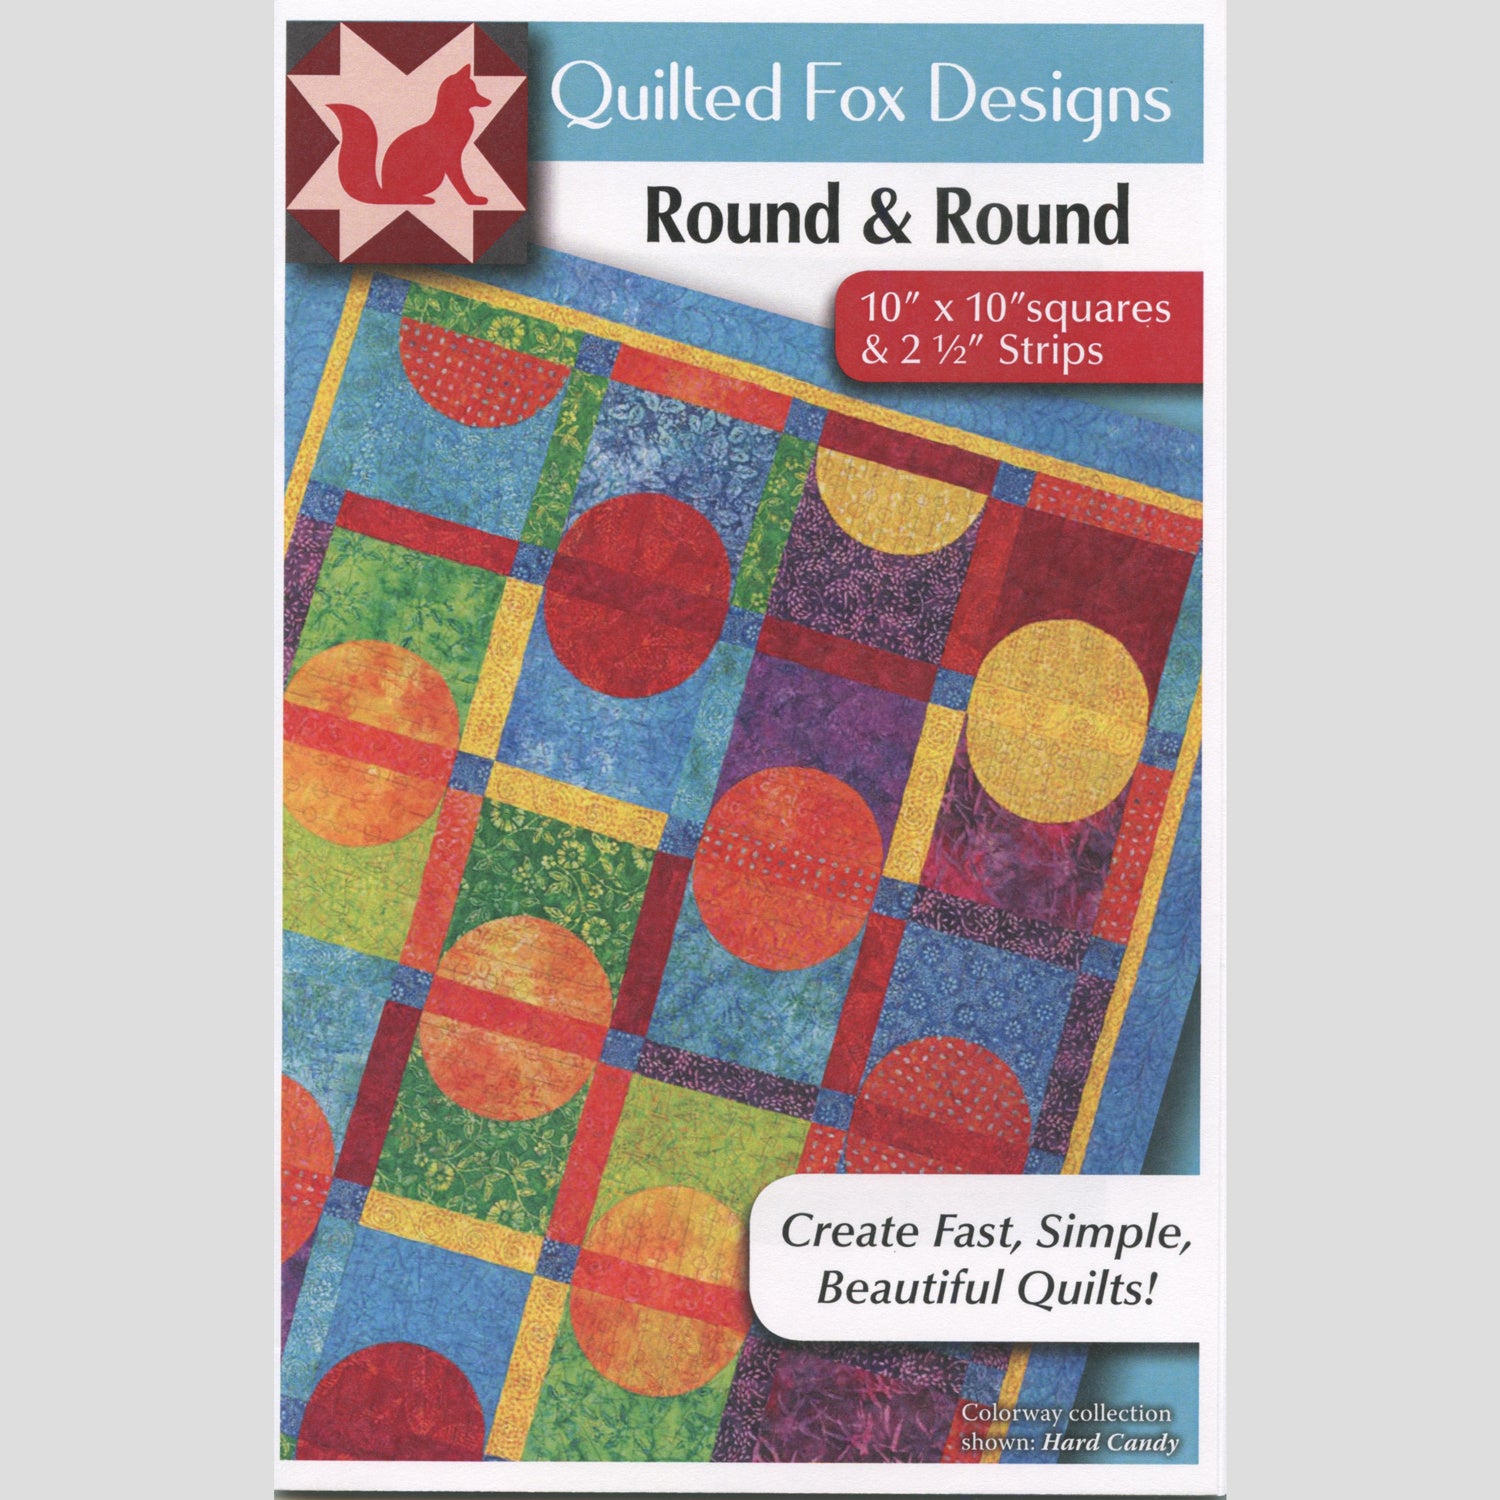 Quilt Design Board ~ Quilting Design Wall ~ Round ish Design Board 